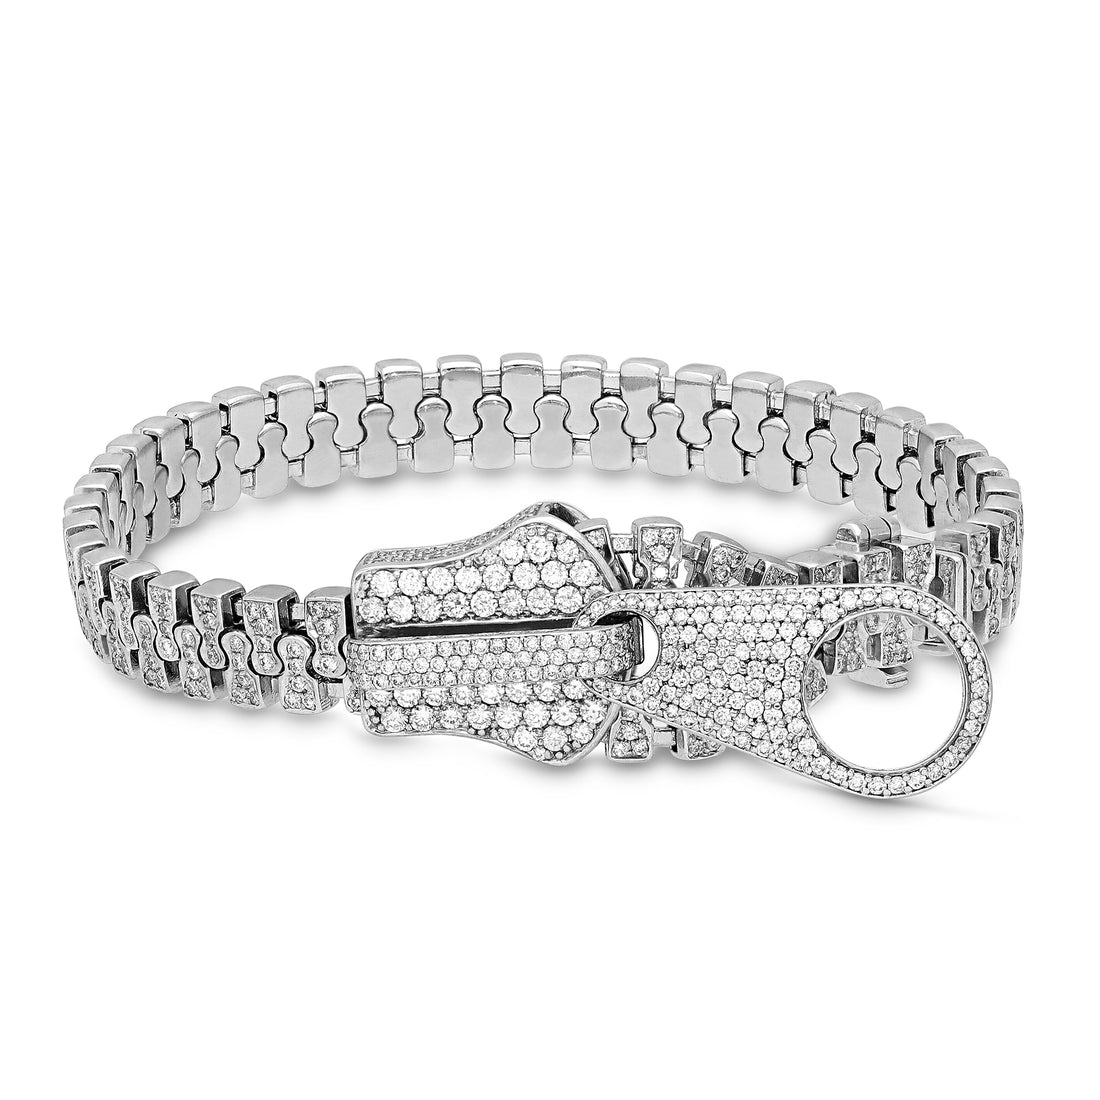 4.63 carat diamond zipper bracelet in 18k white gold